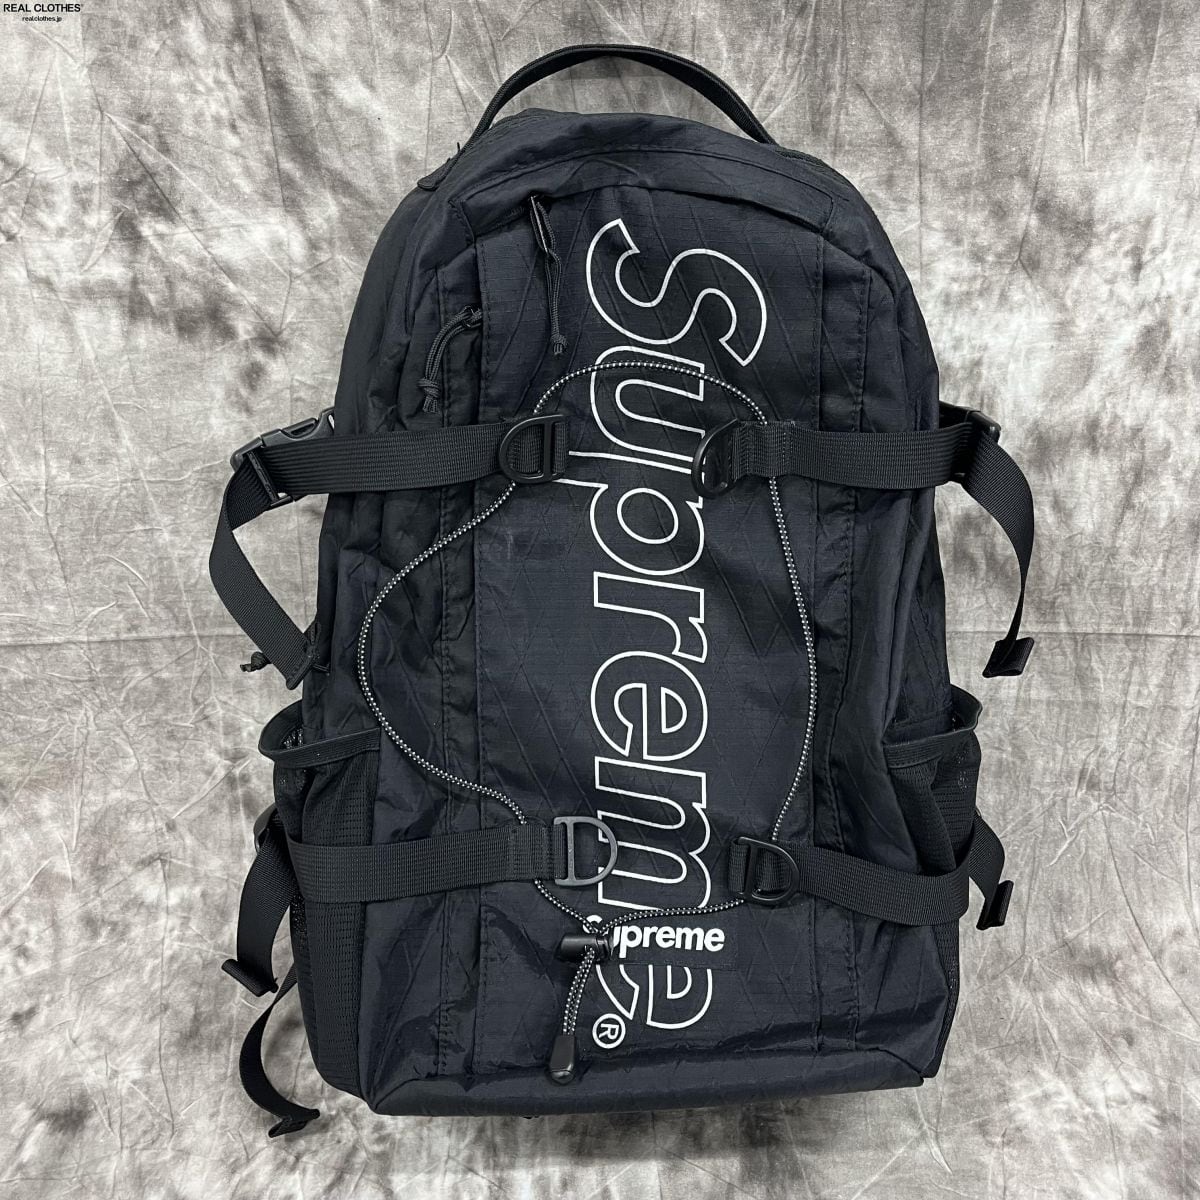 18AW Supreme backpack